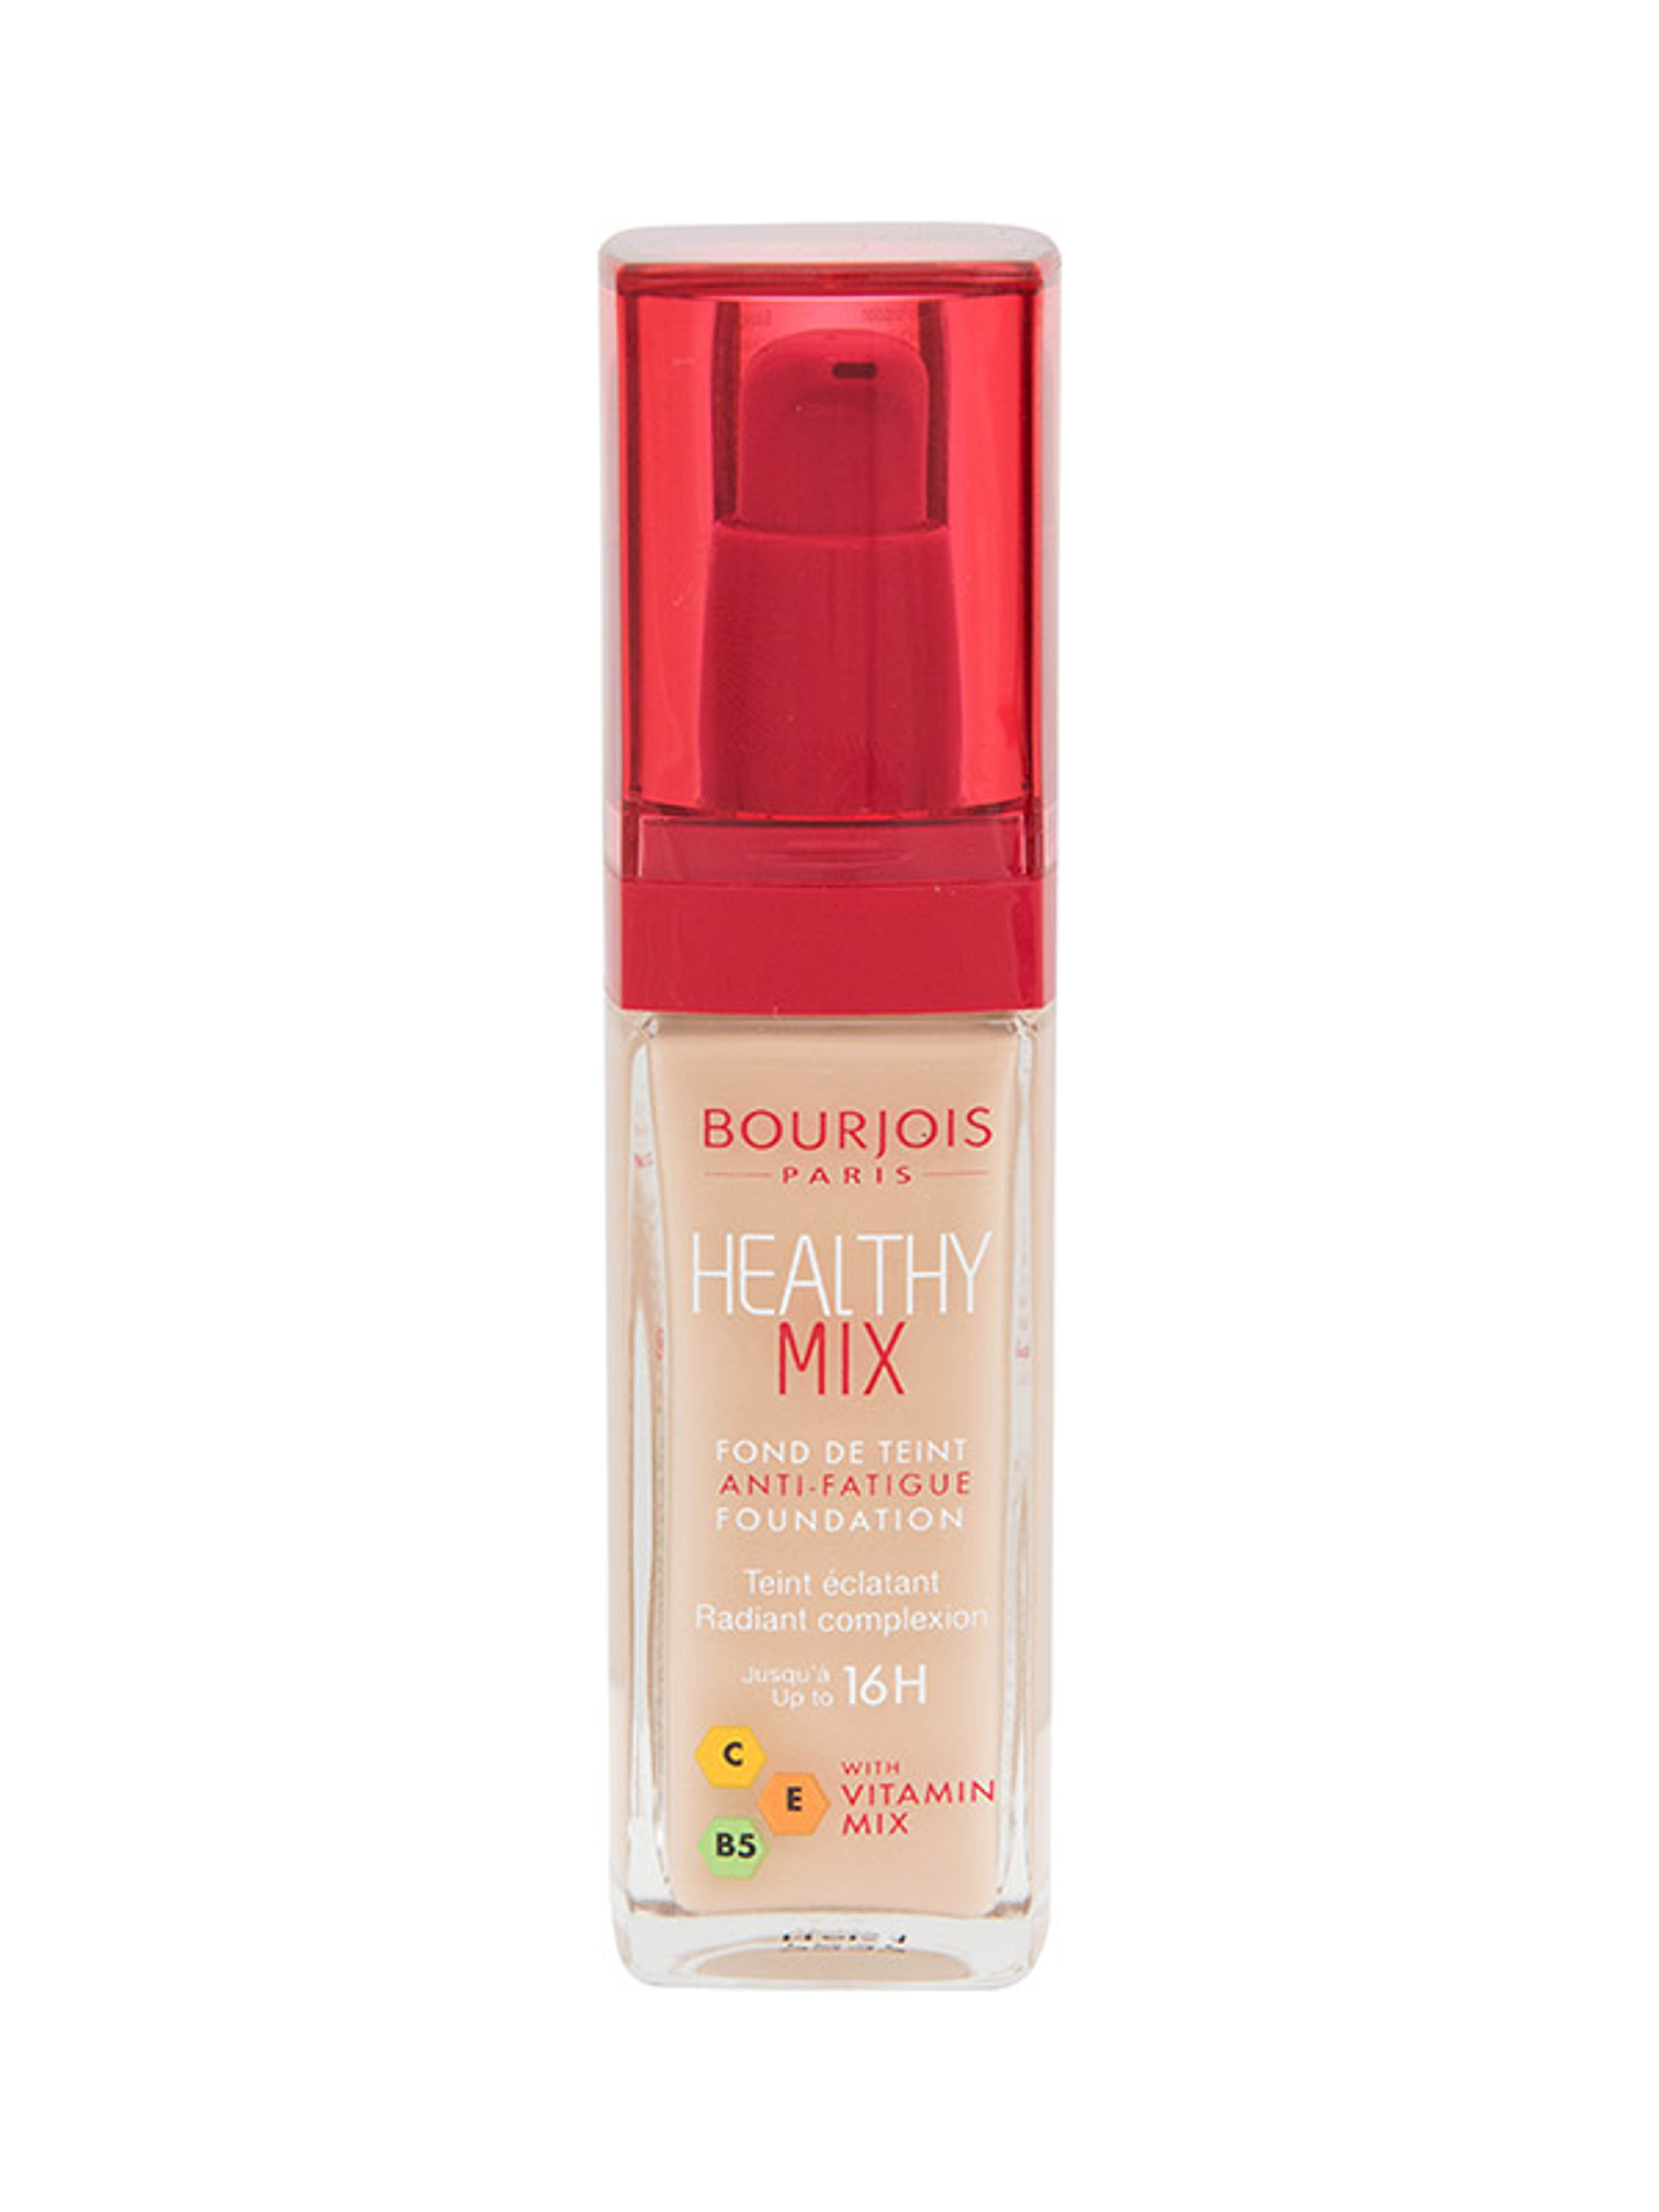 Bourjois alapozó healthy mix /51 - 1 db